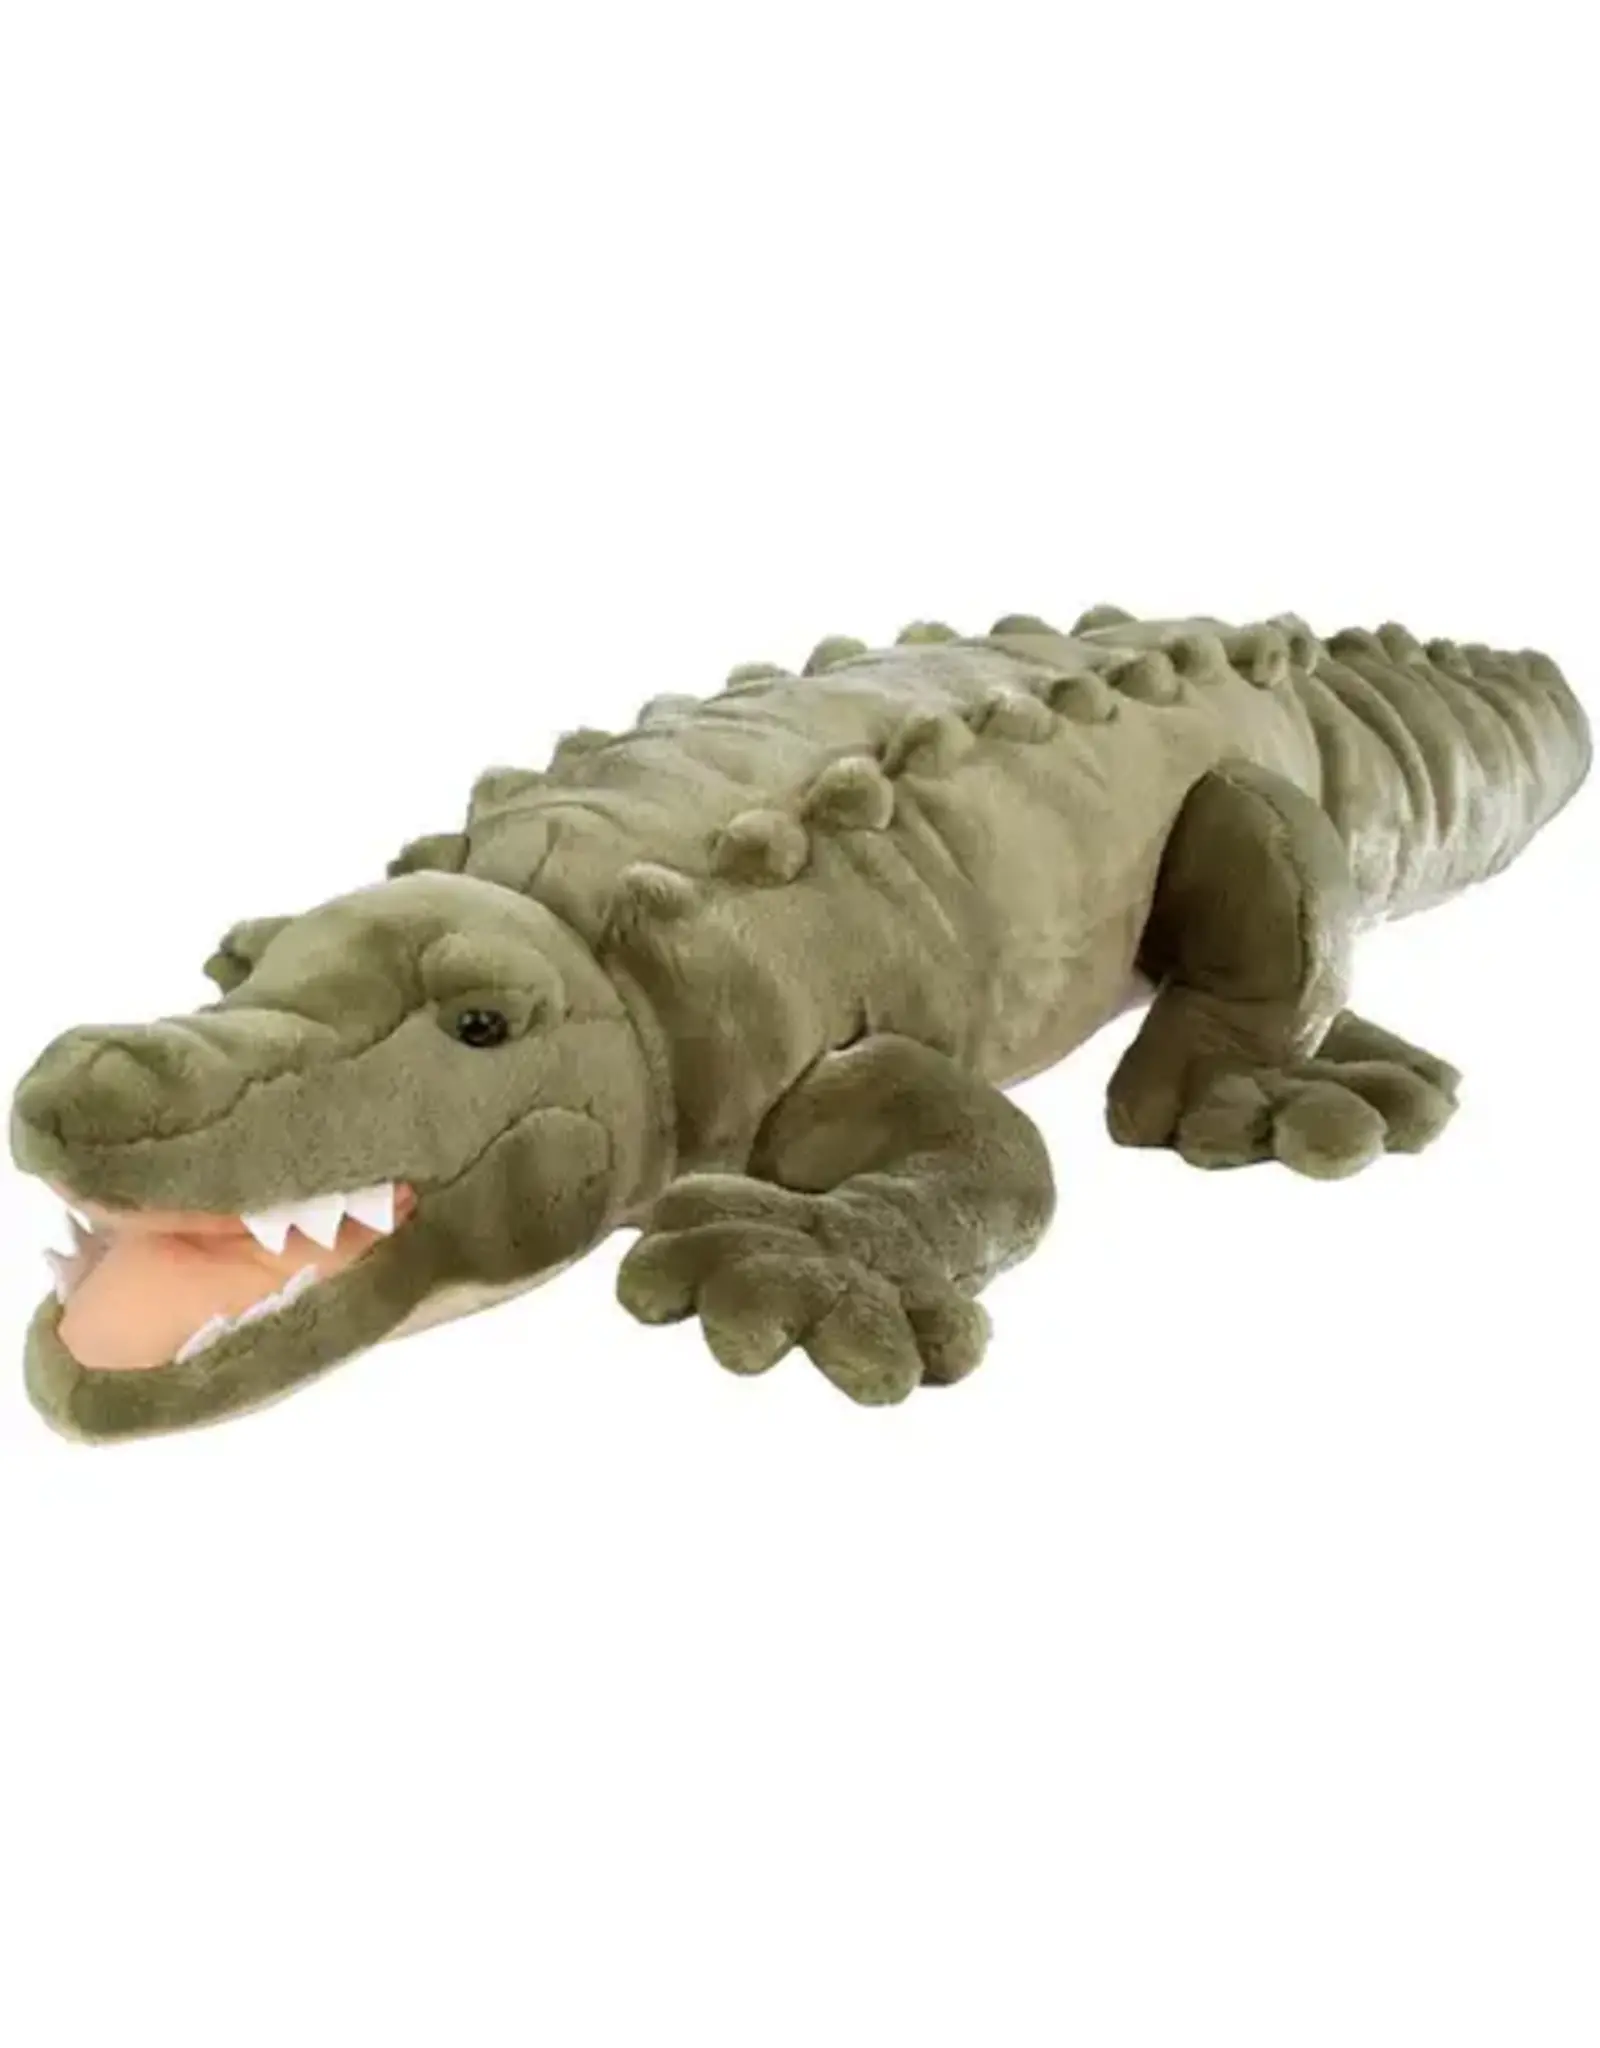 Crocodile Stuffed Animal - 36"